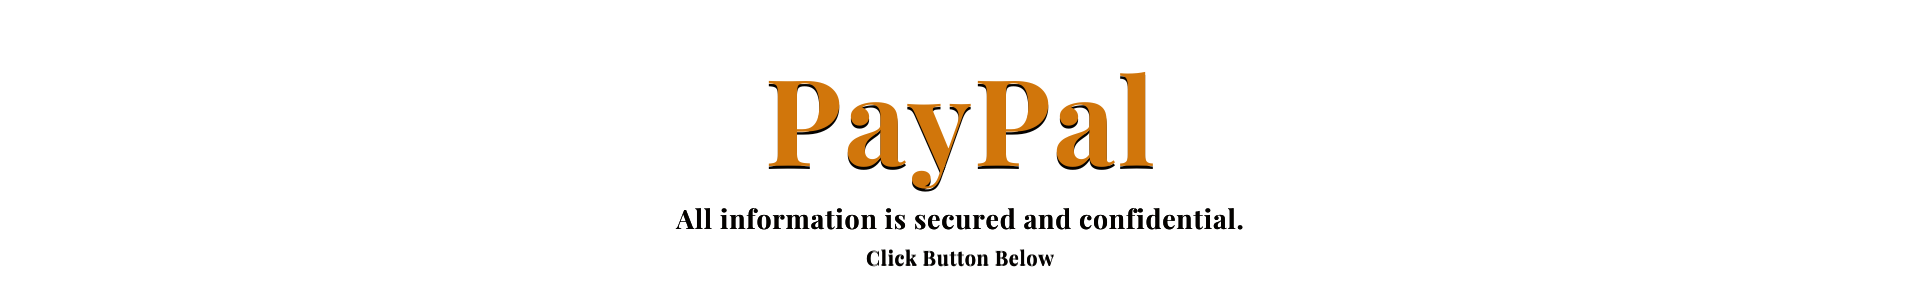 PayPal Button Header